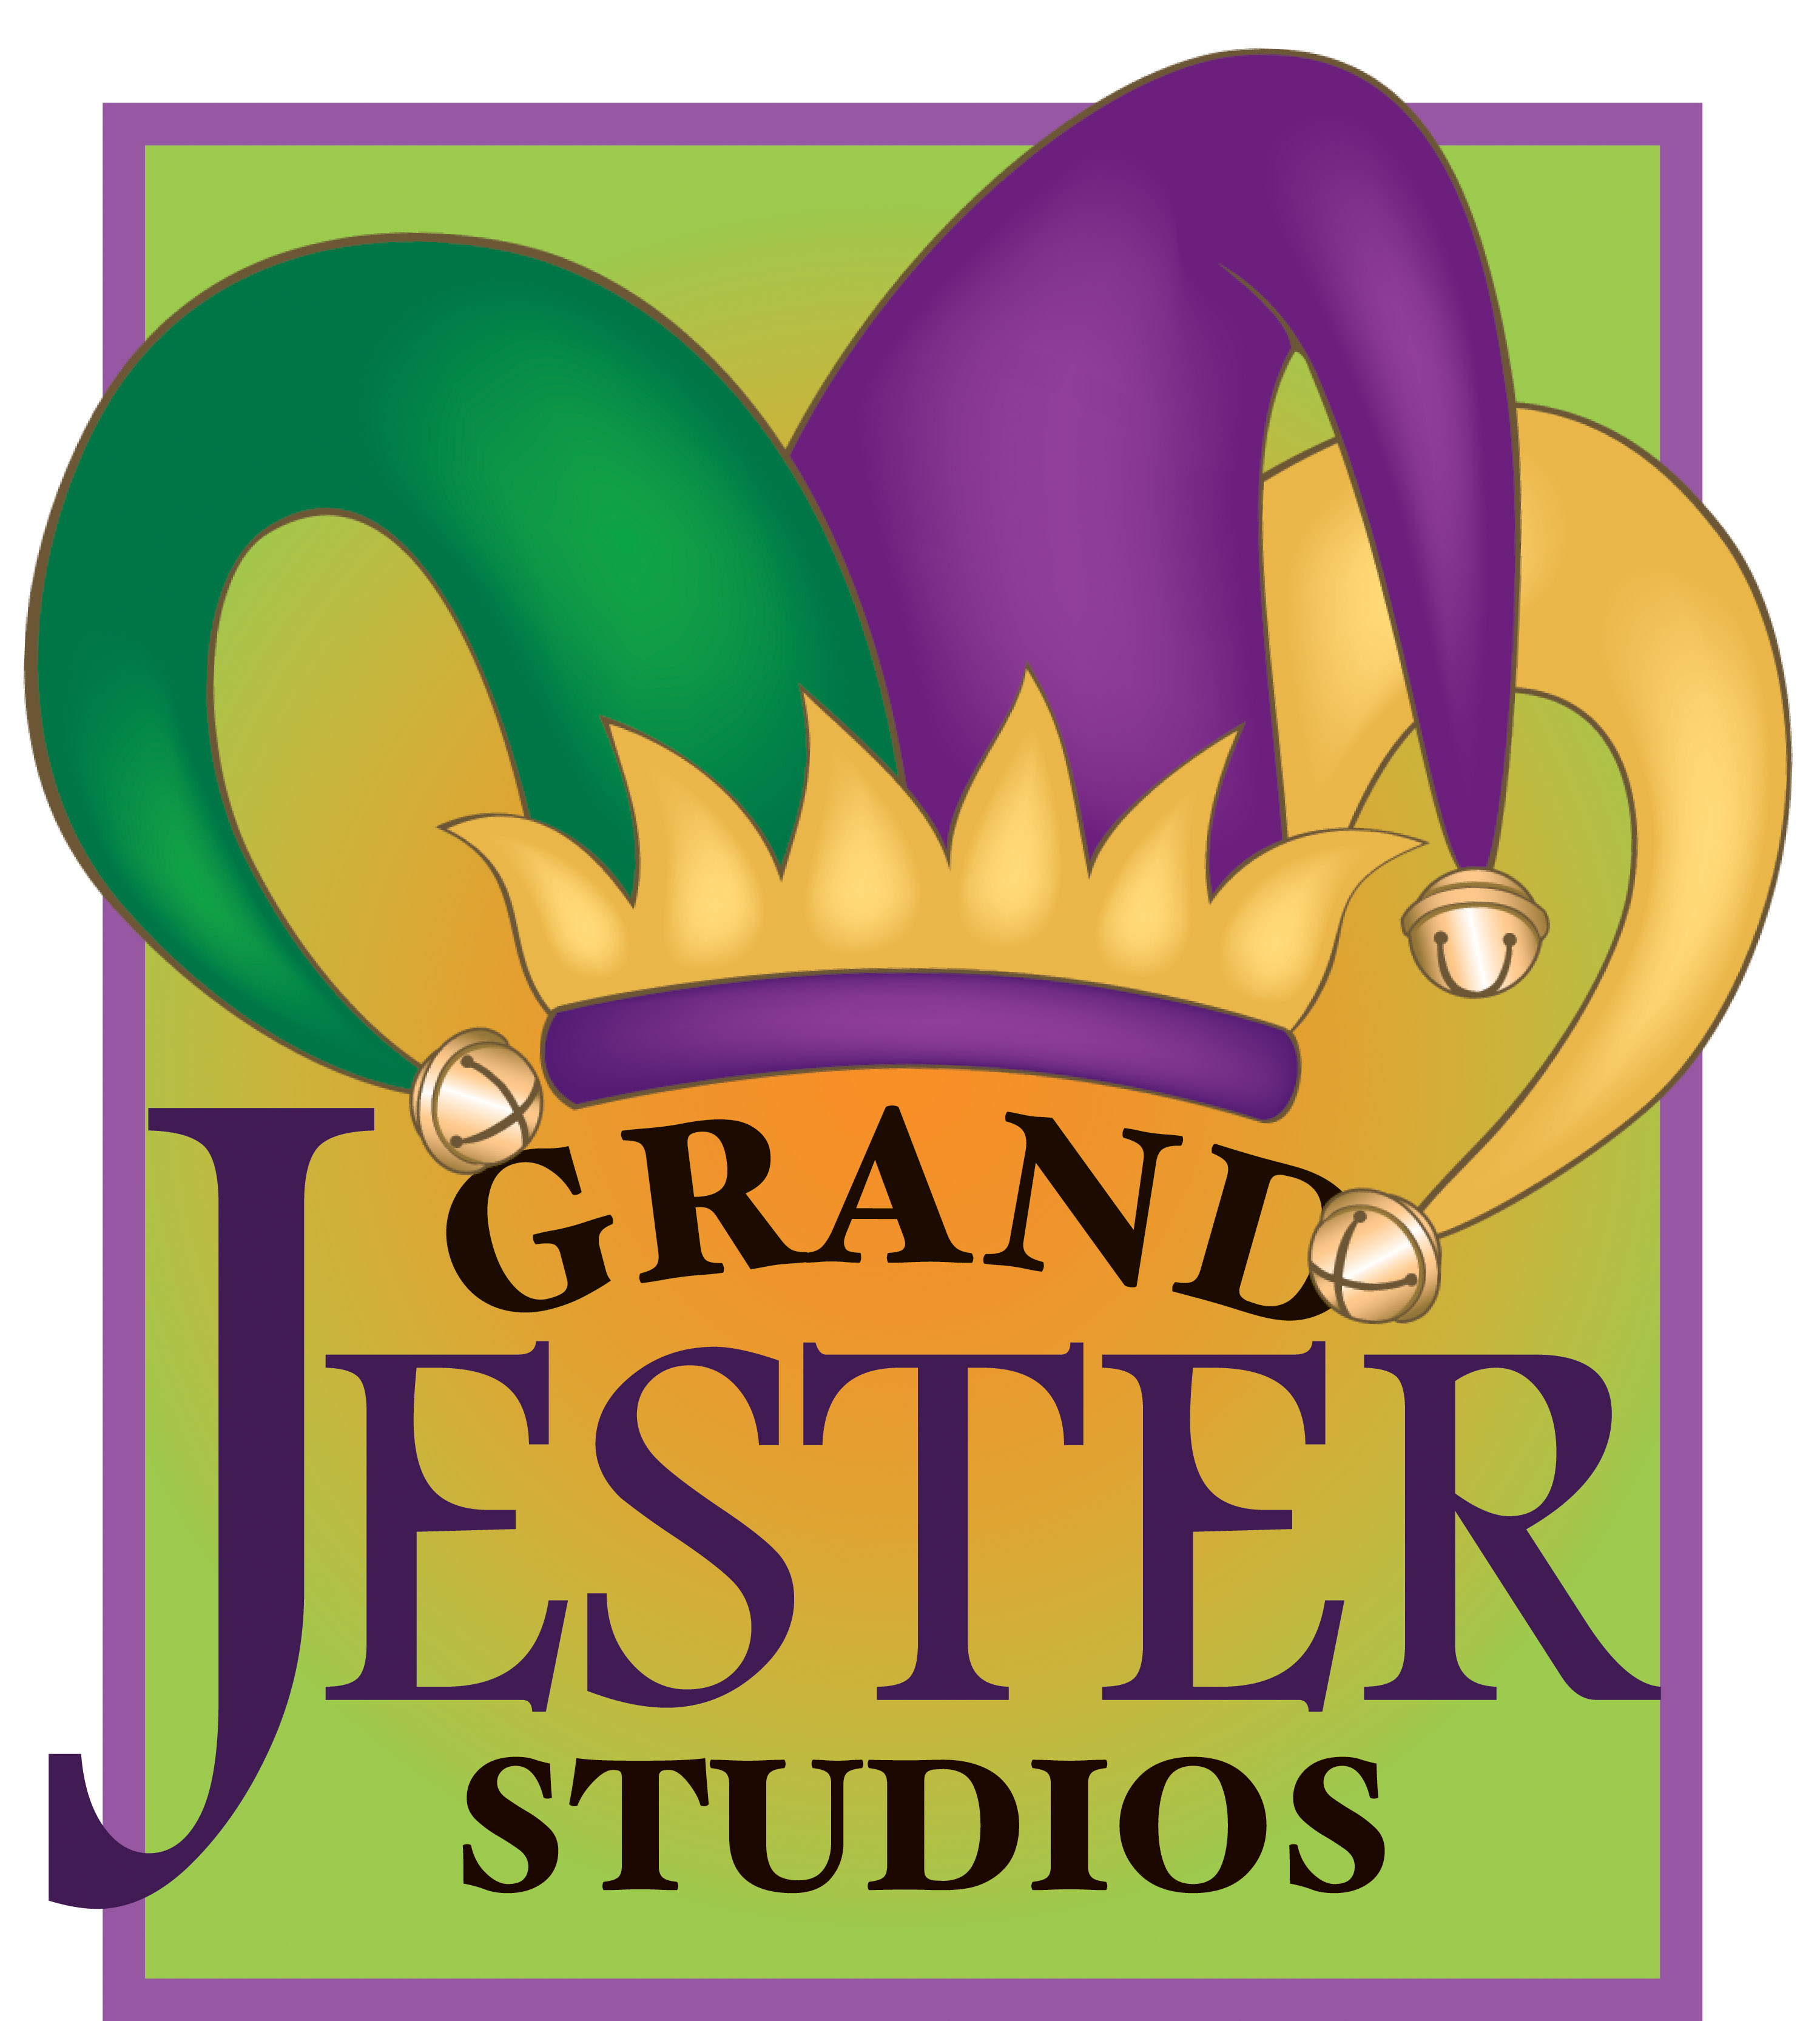 Disney Grand Jester Studios